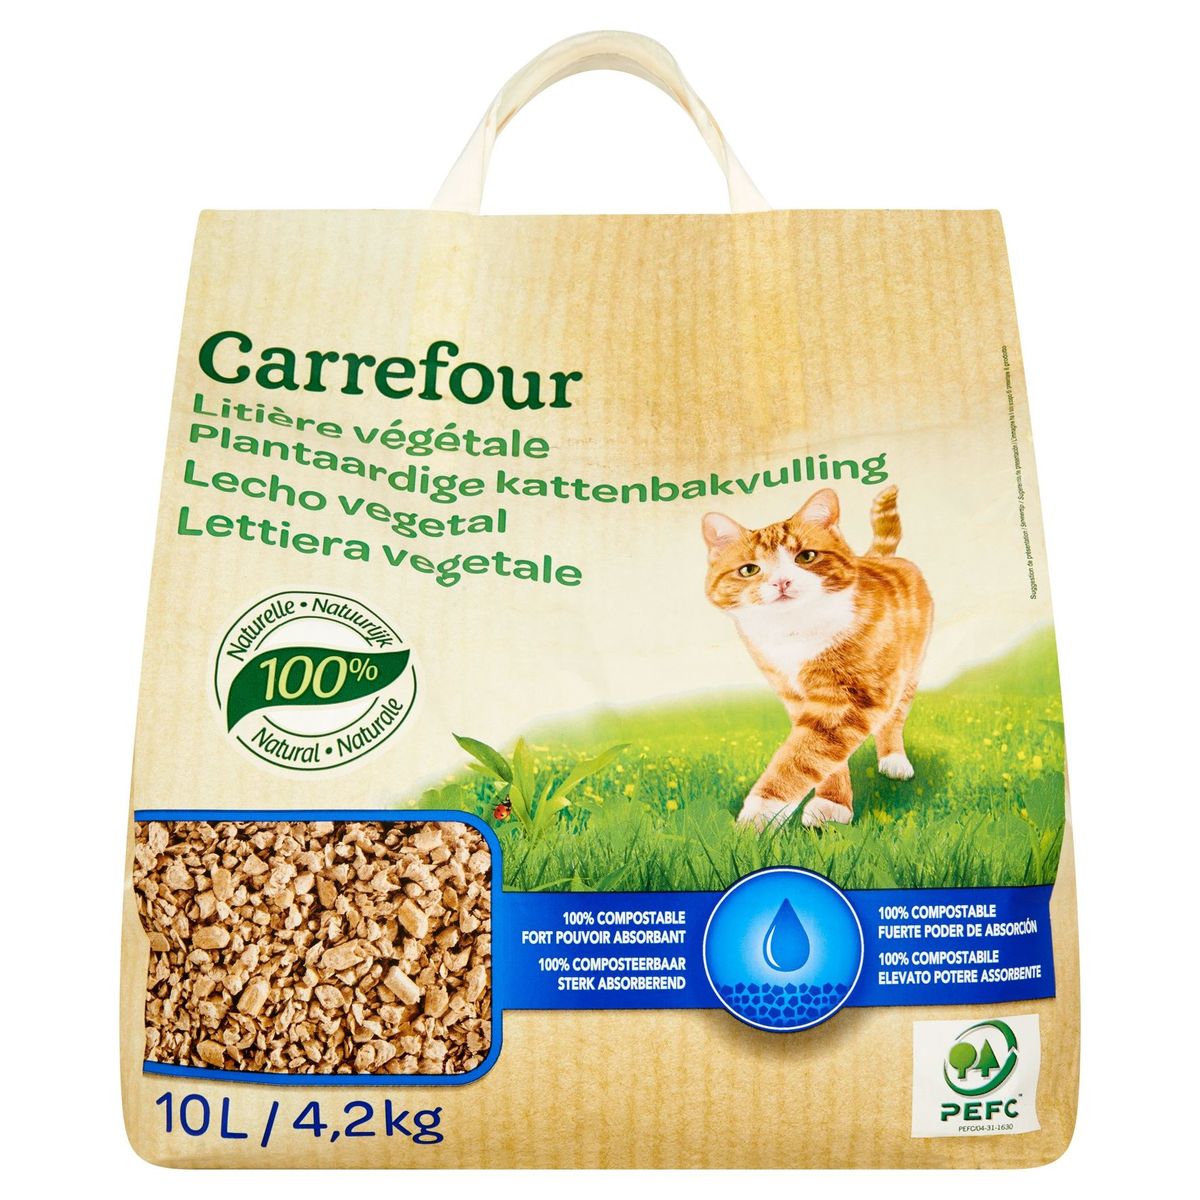 Carrefour Plantaardige Kattenbakvulling 4.2 kg